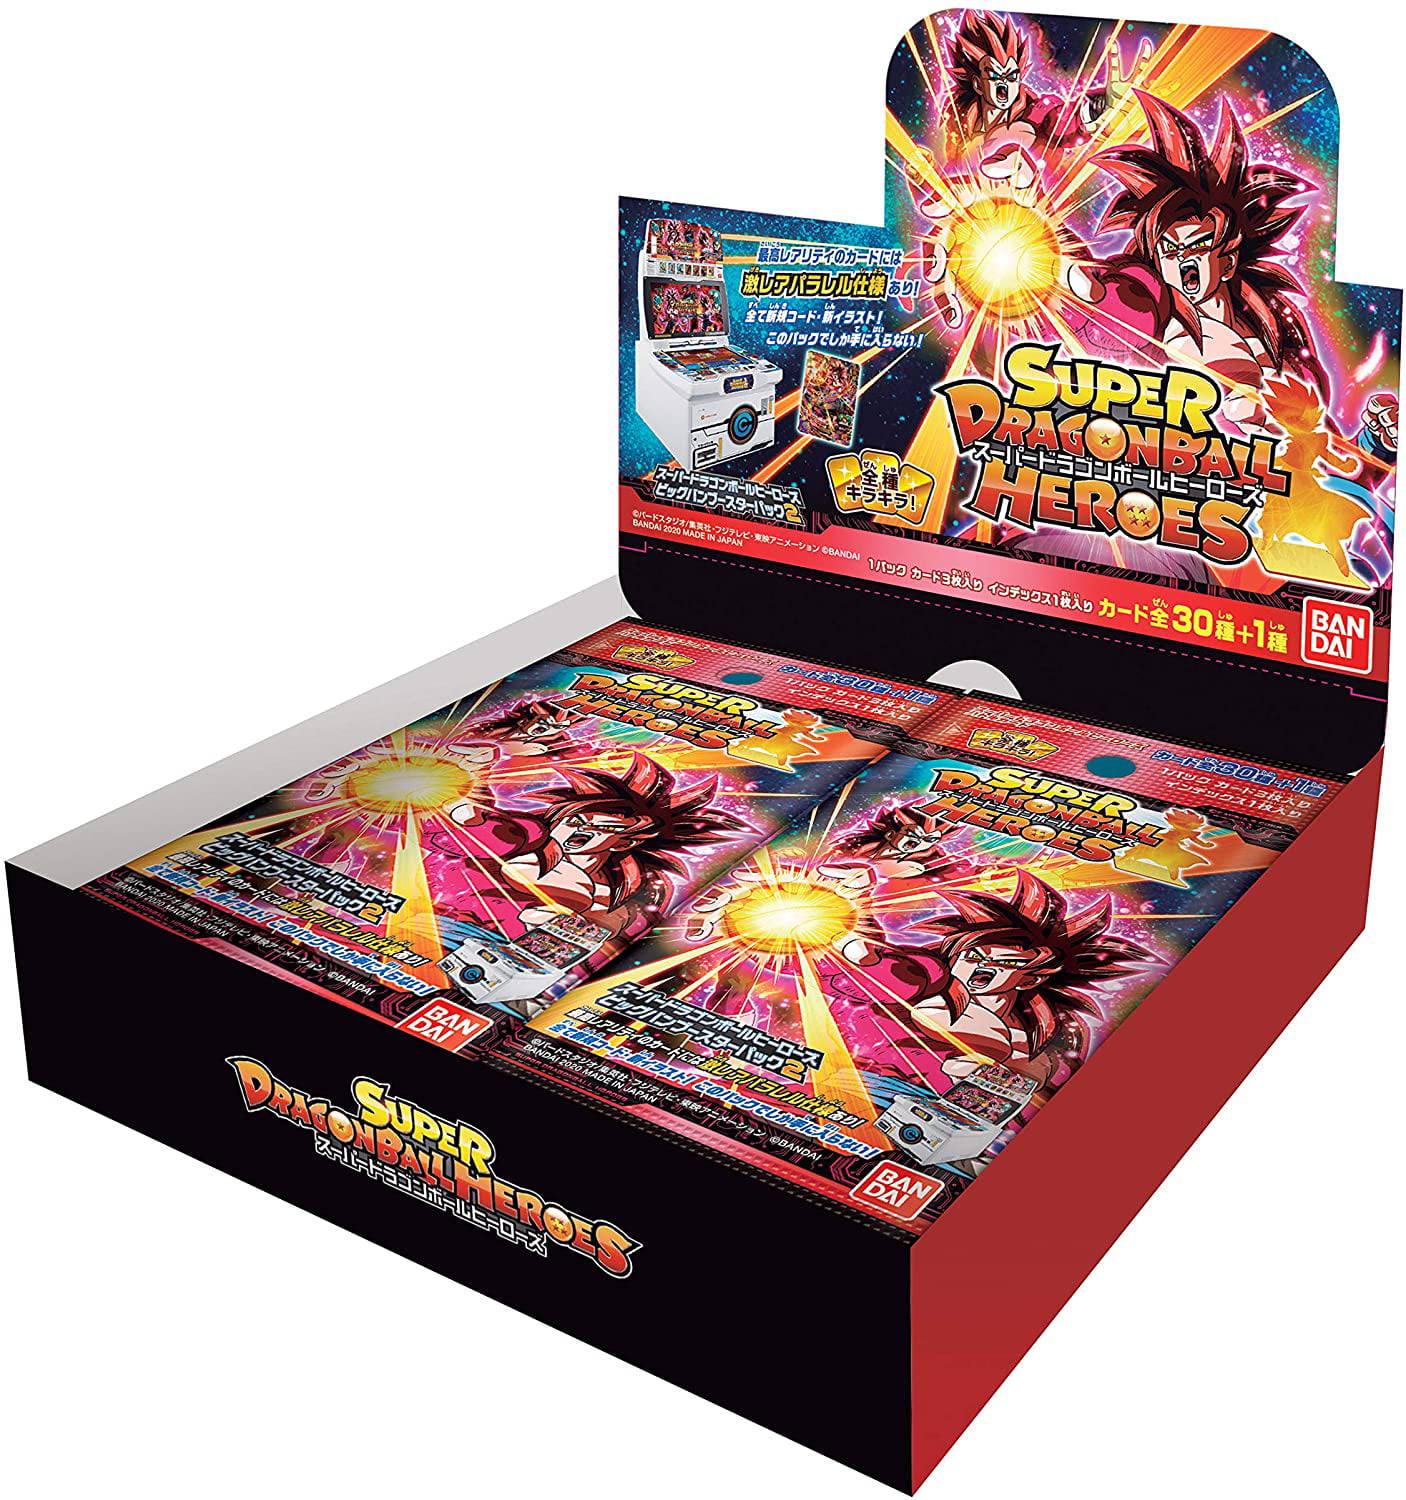 Bandai Super Dragon Ball Heroes Big Bang Booster Pack 2 Box 1box 20 Packs 3 Cards In 1 Pack By Visit The Bandai Namco Entertainment Store Walmart Com Walmart Com